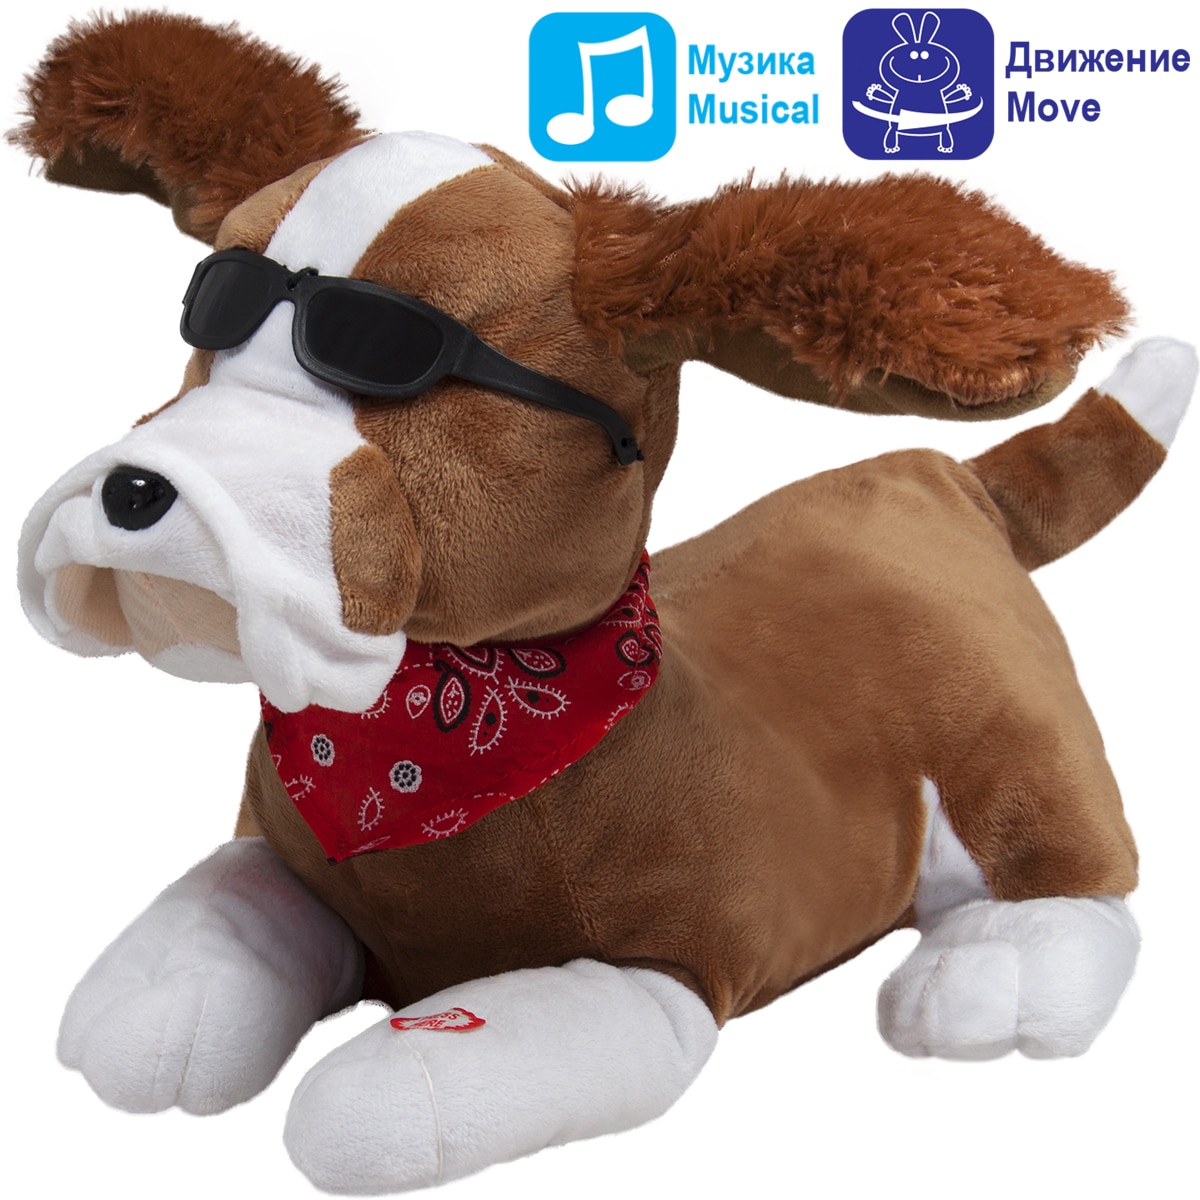 Interactive toy - Singing dog